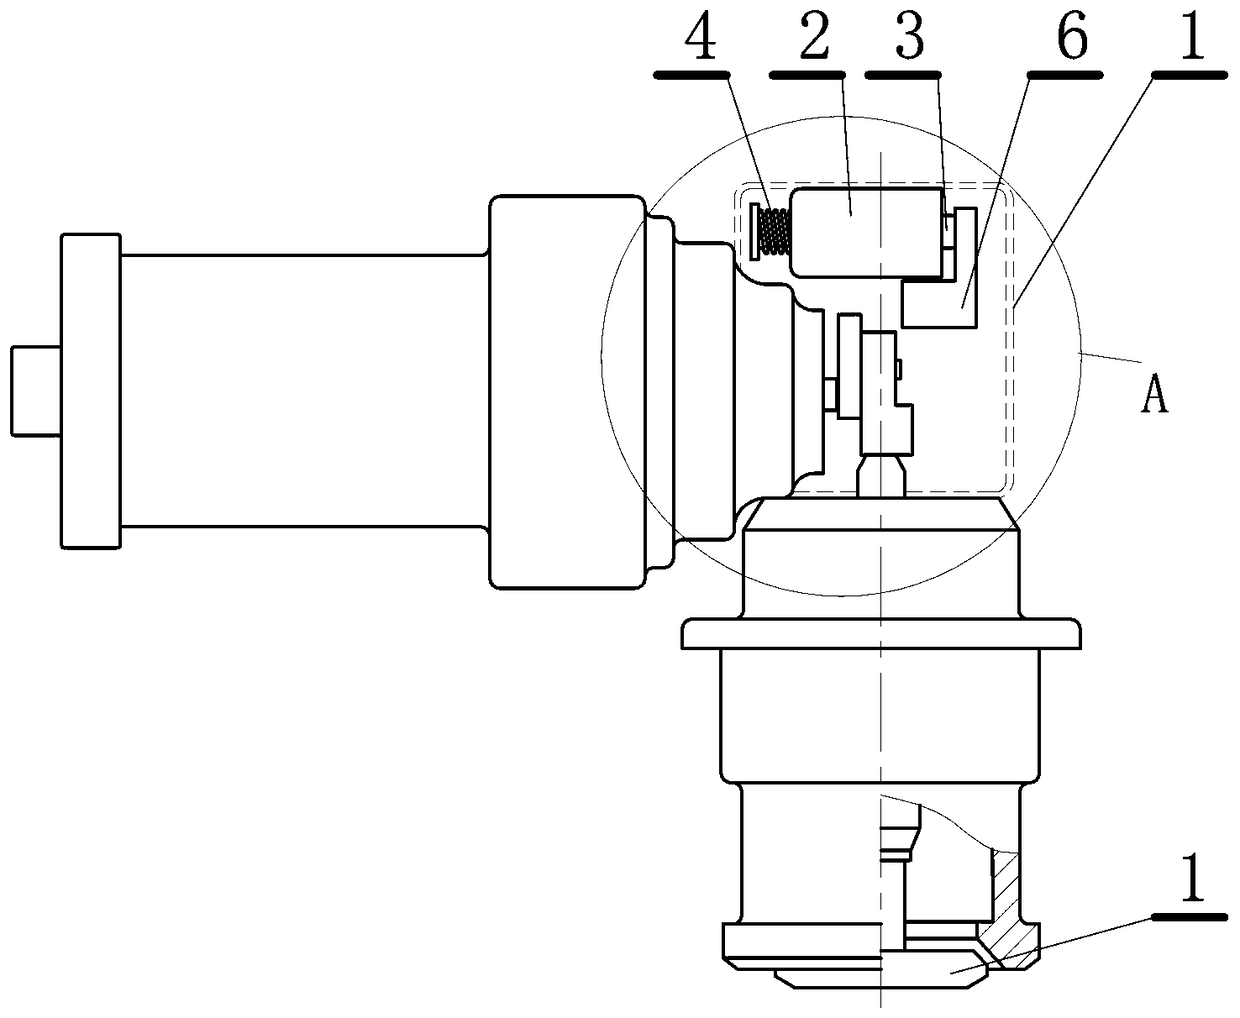 An electric egr valve anti-carbon sticking mechanism